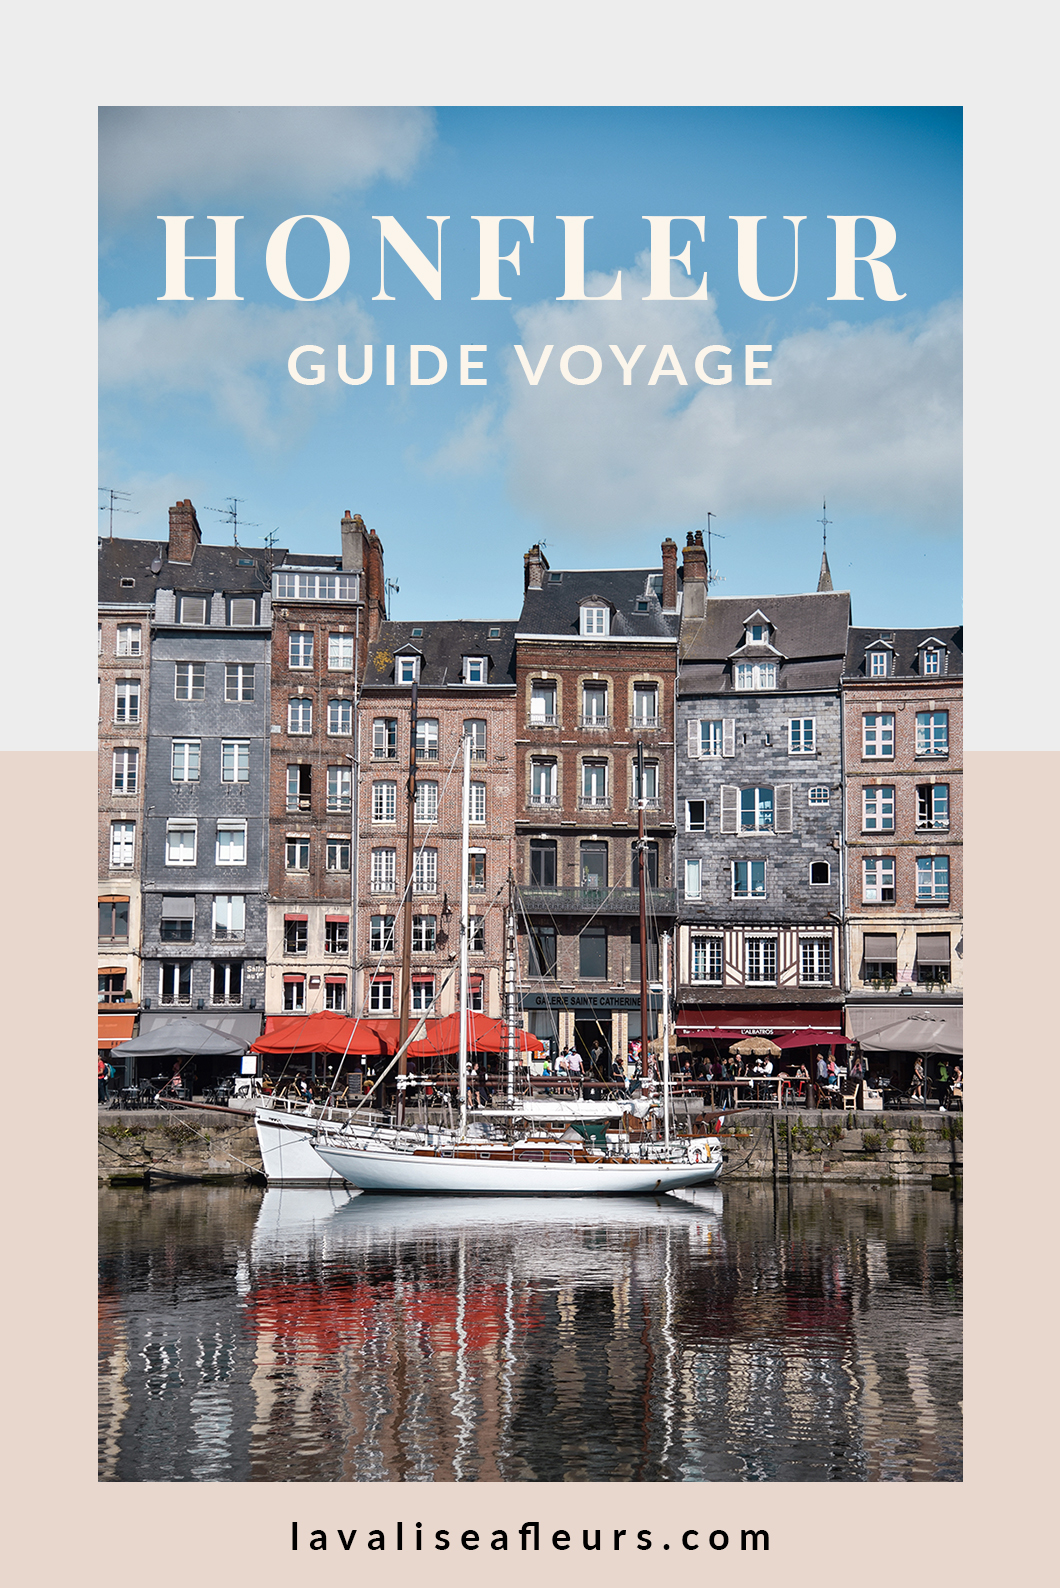 Guide voyage de Honfleur